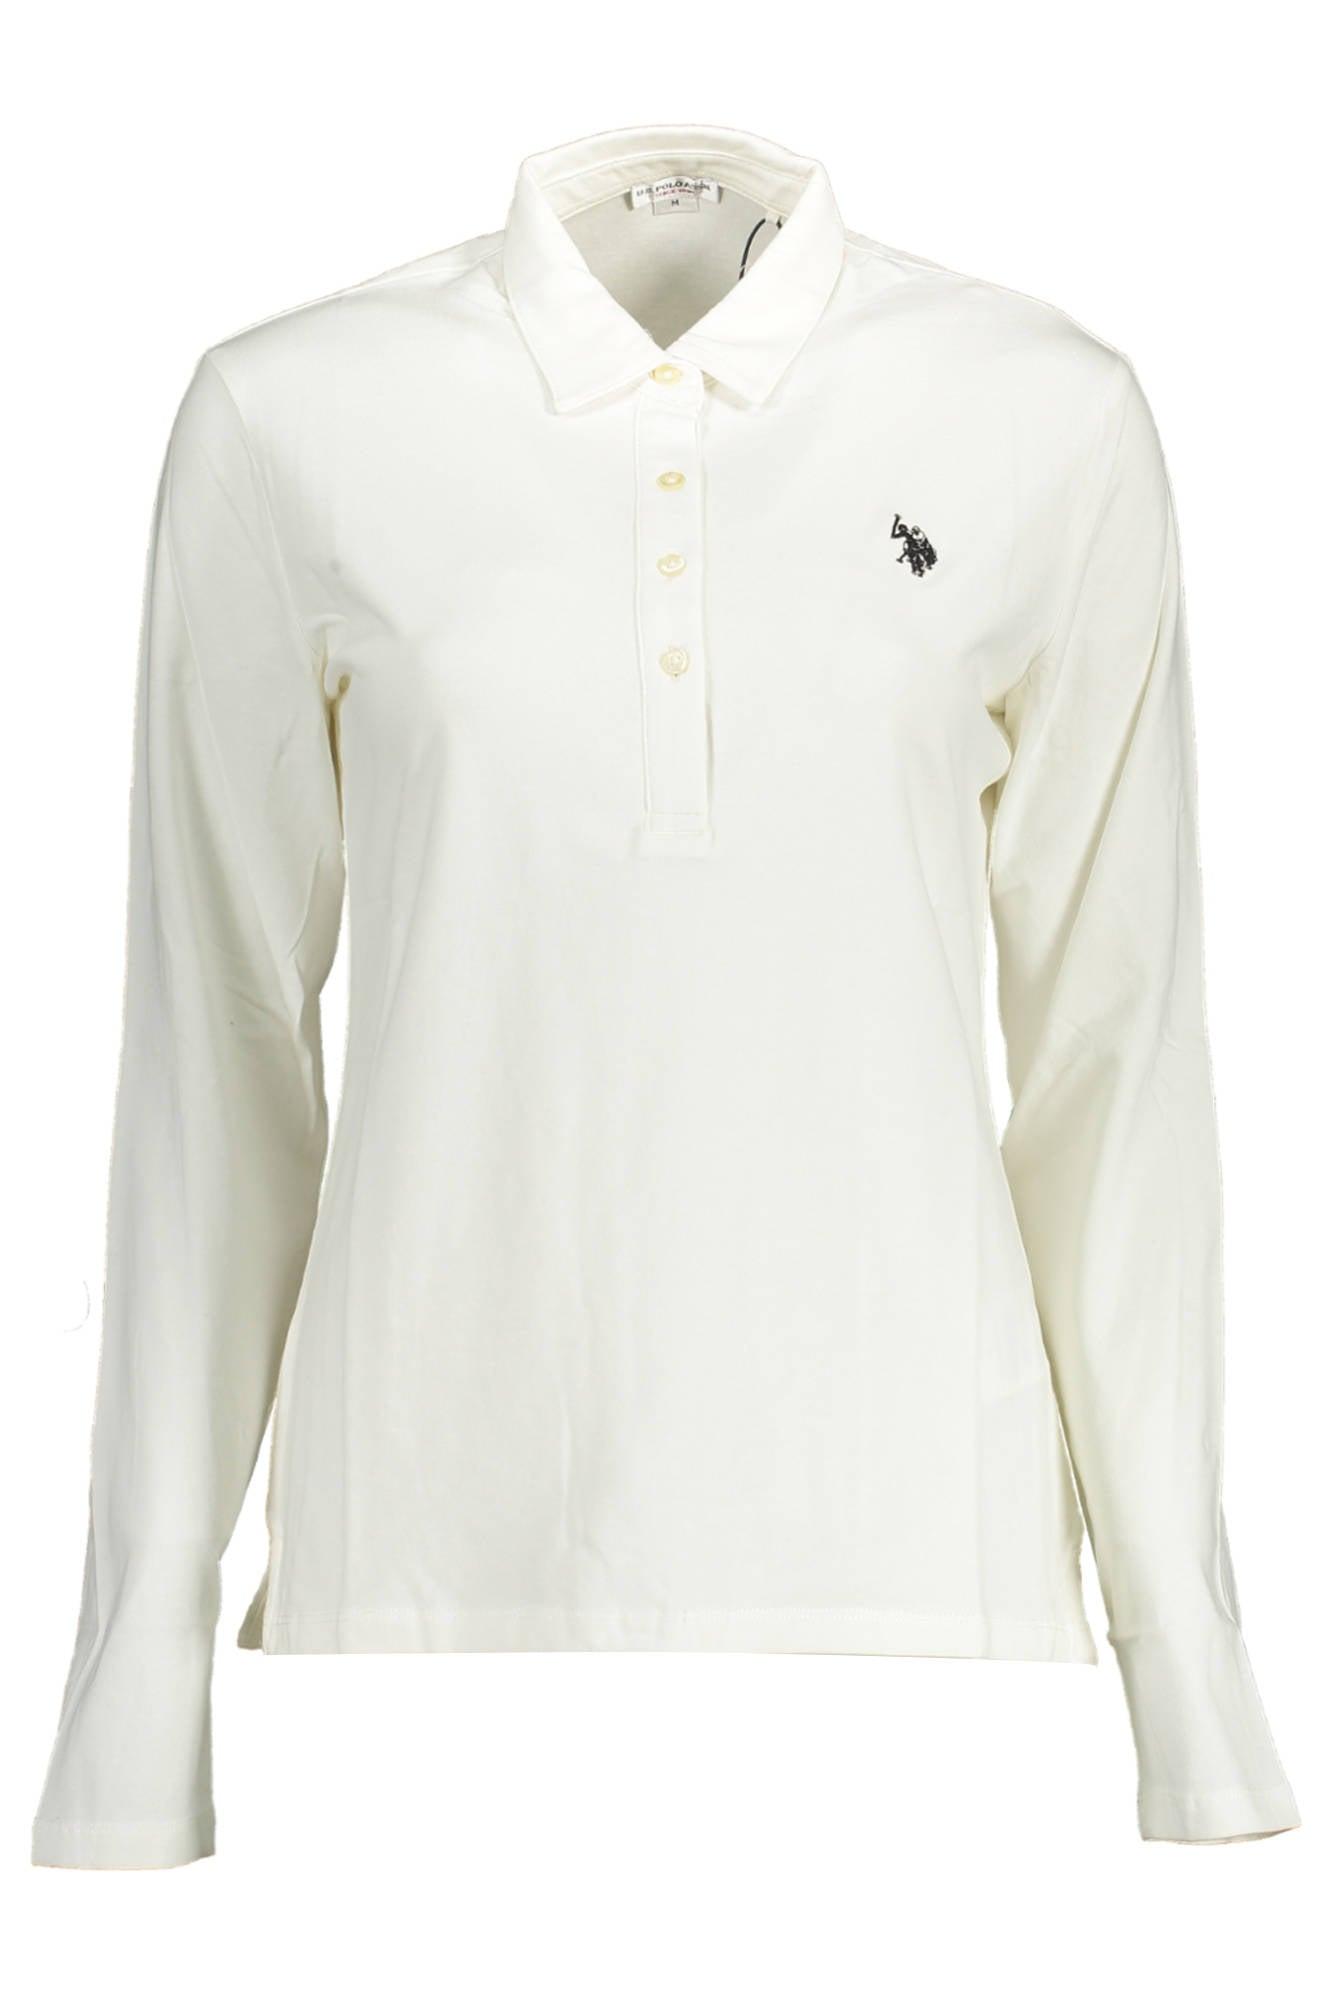 U.S. POLO ASSN. Cotton Polo Shirt in White | Lyst